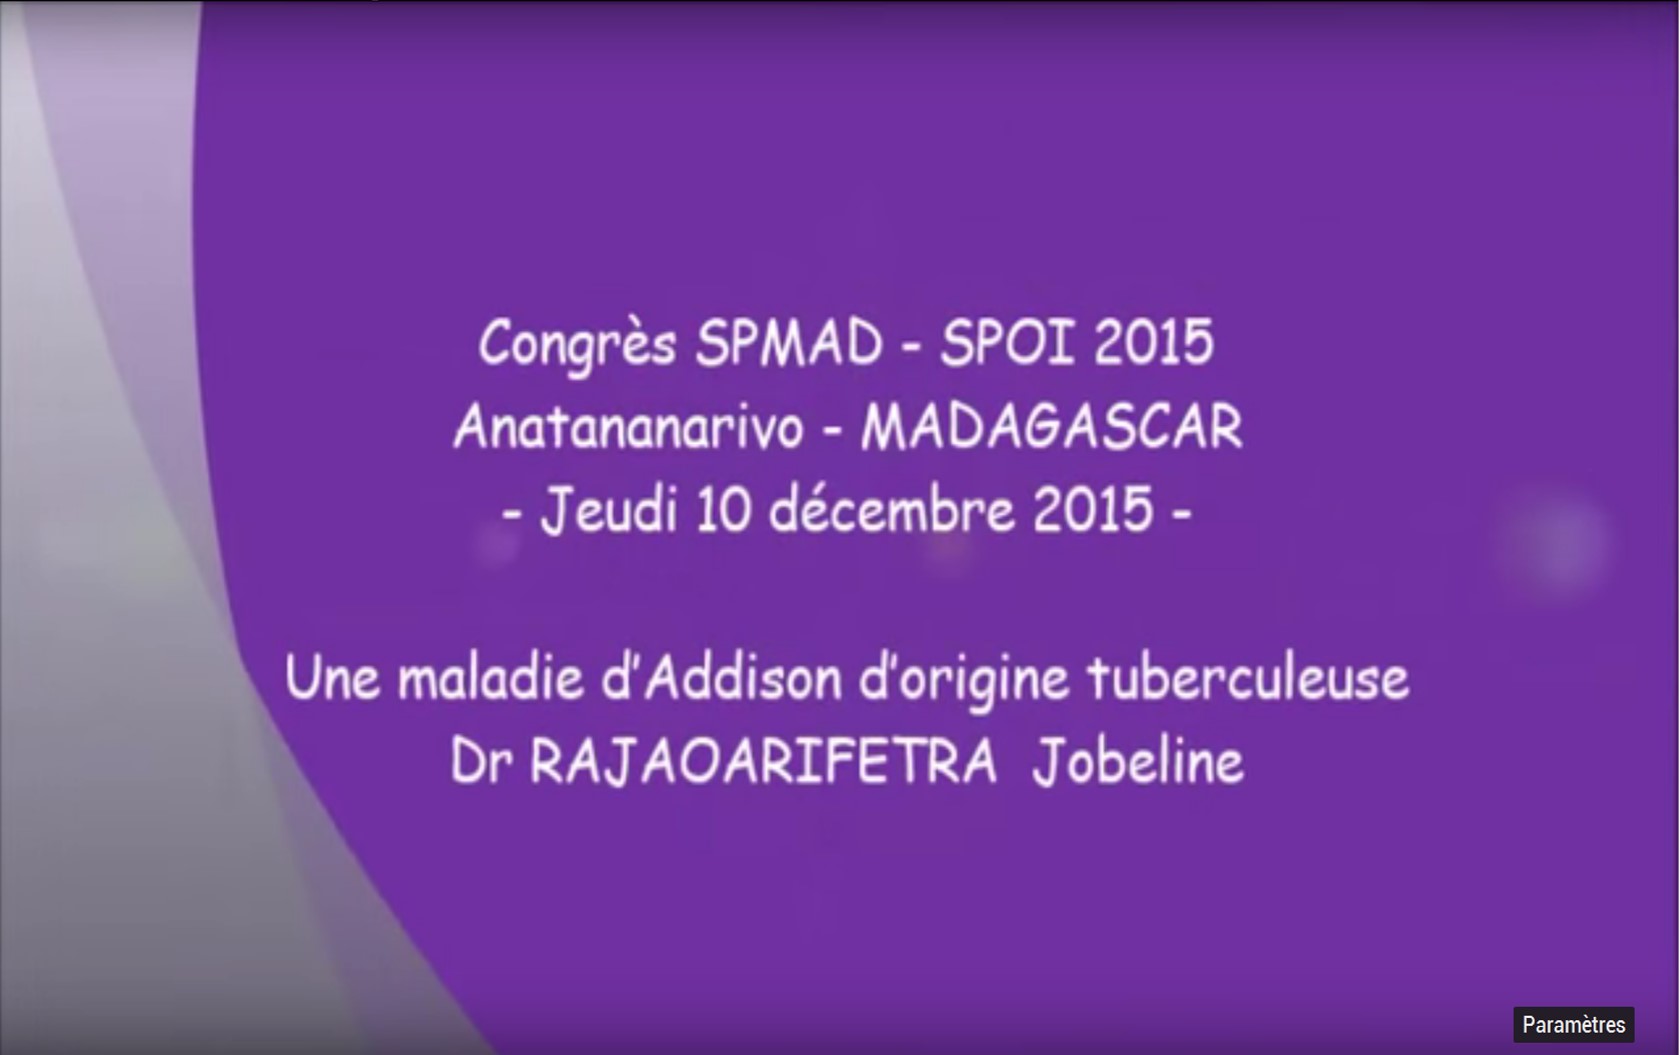 Une maladie d’Addison d’origine tuberculeuse Dr RAJAOARIFETRA Jobeline